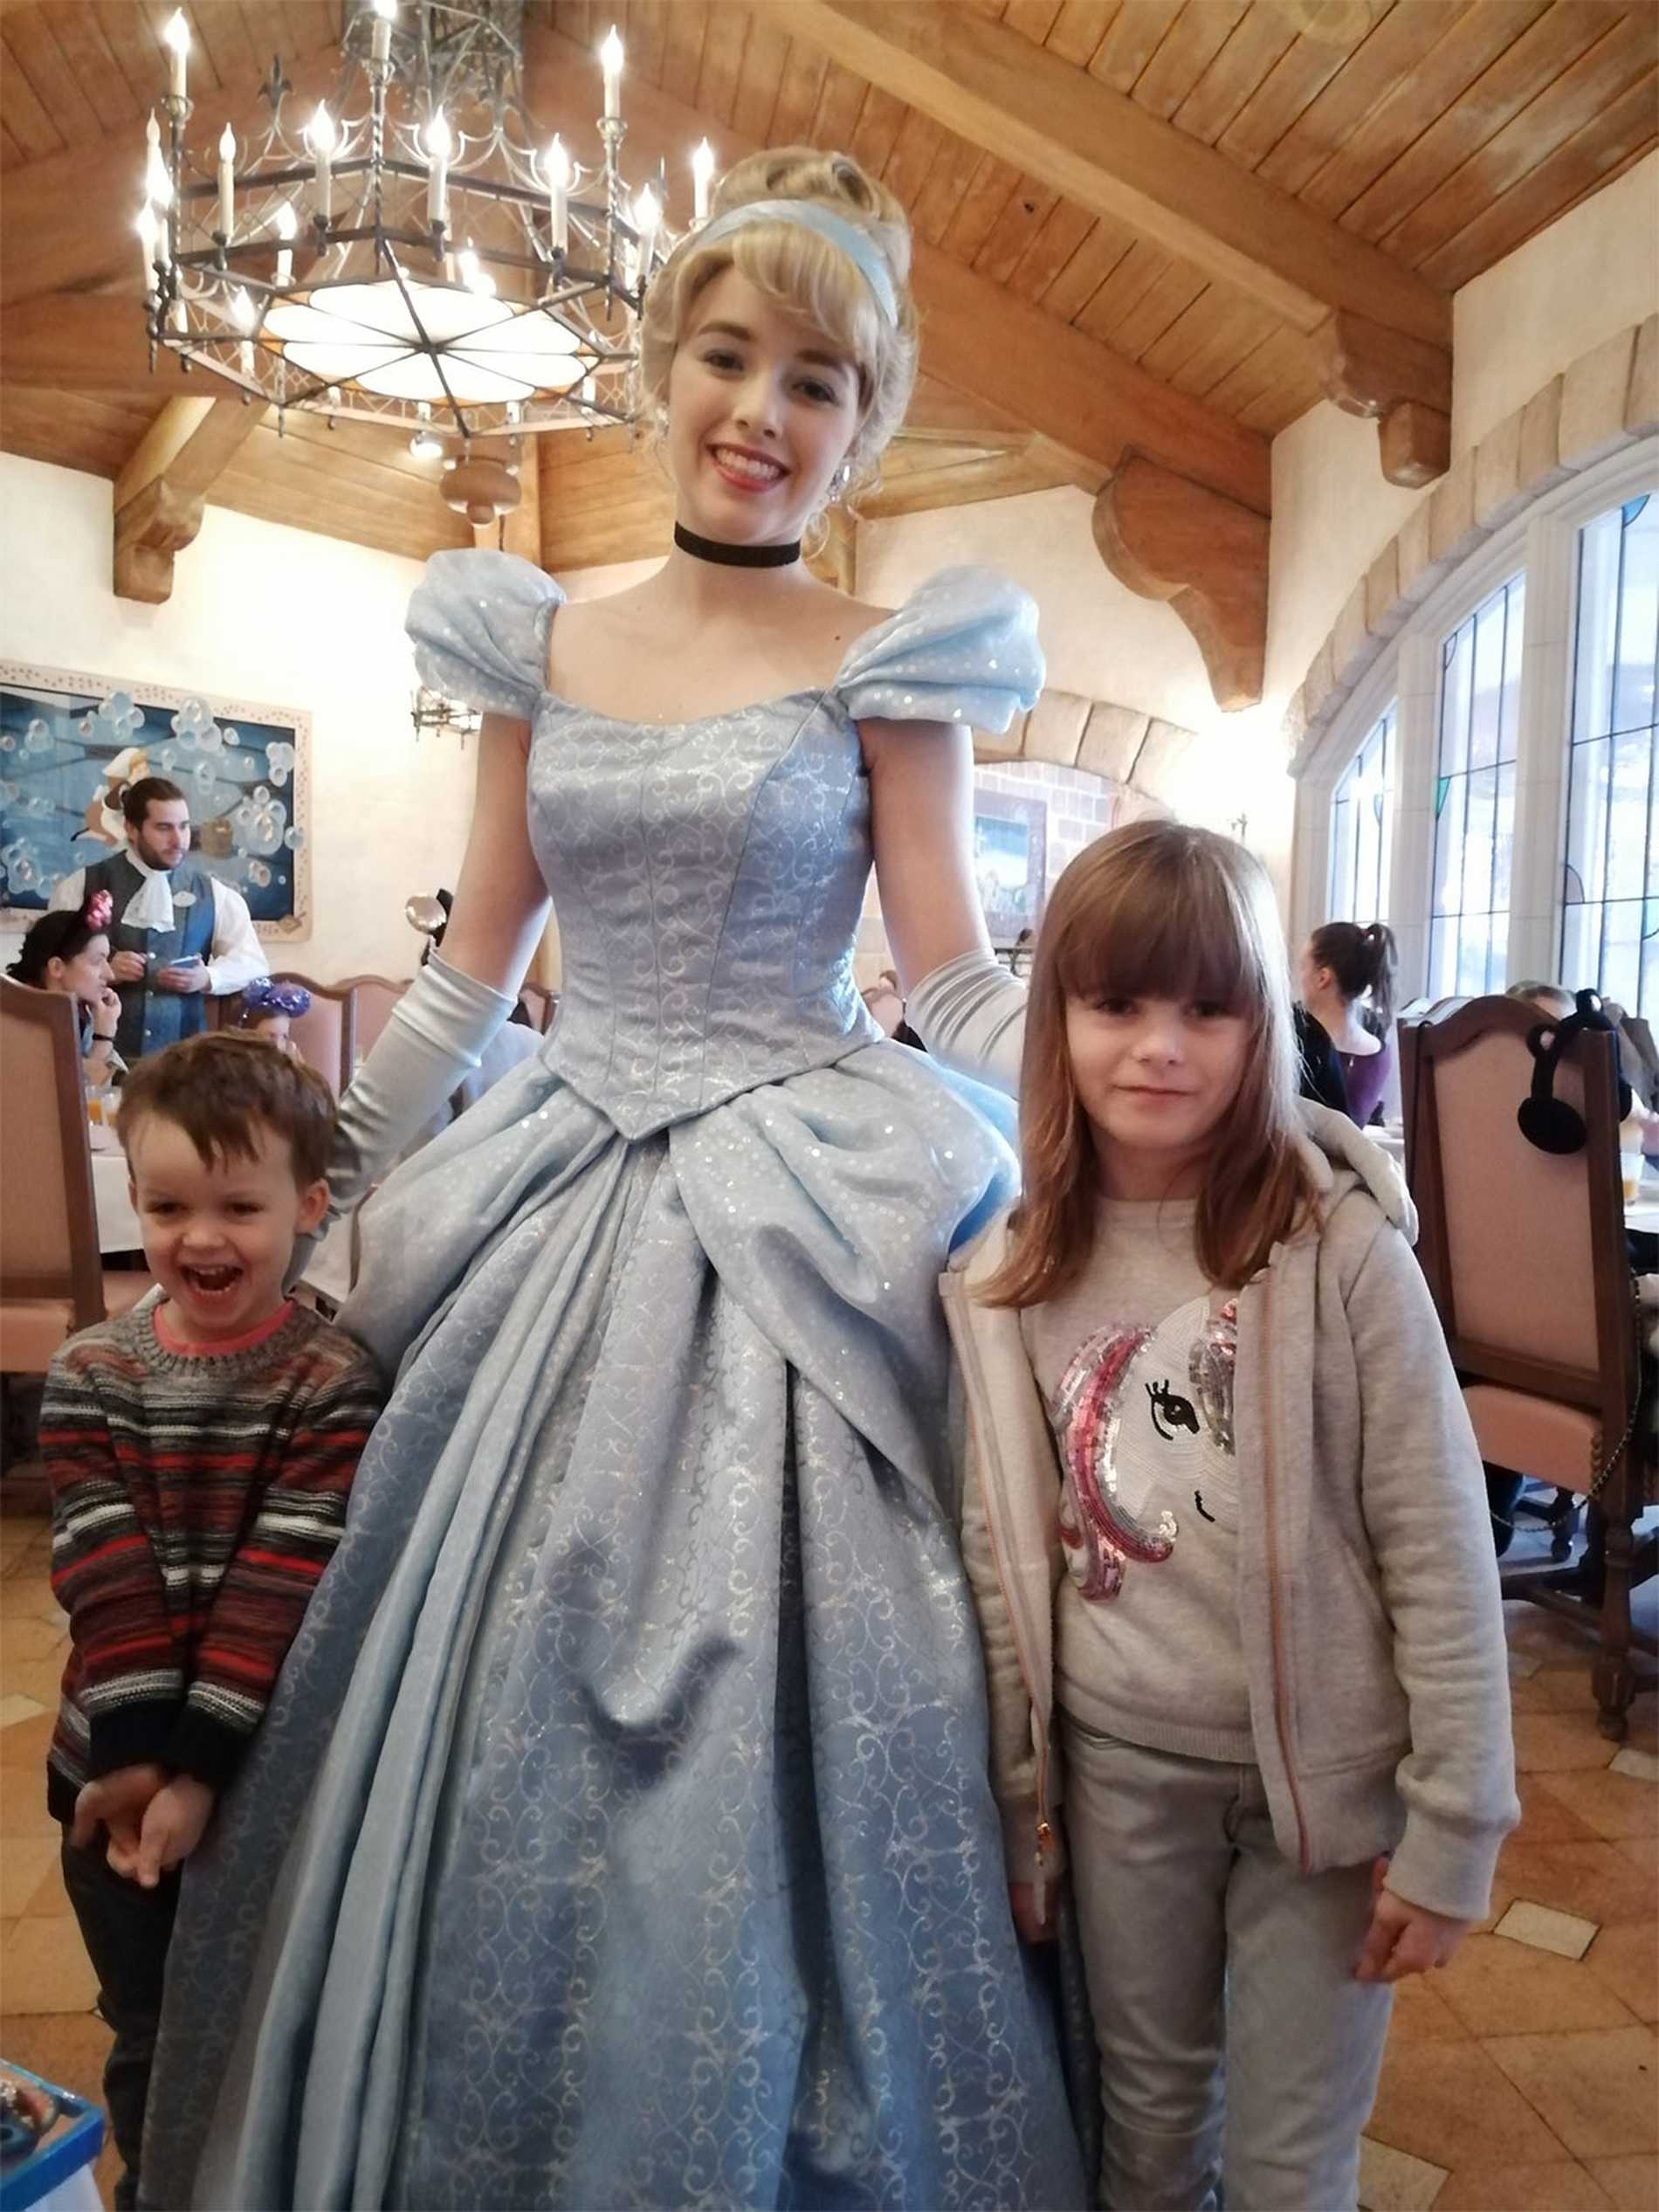 Ezekiel and his sister with a Disney princess.